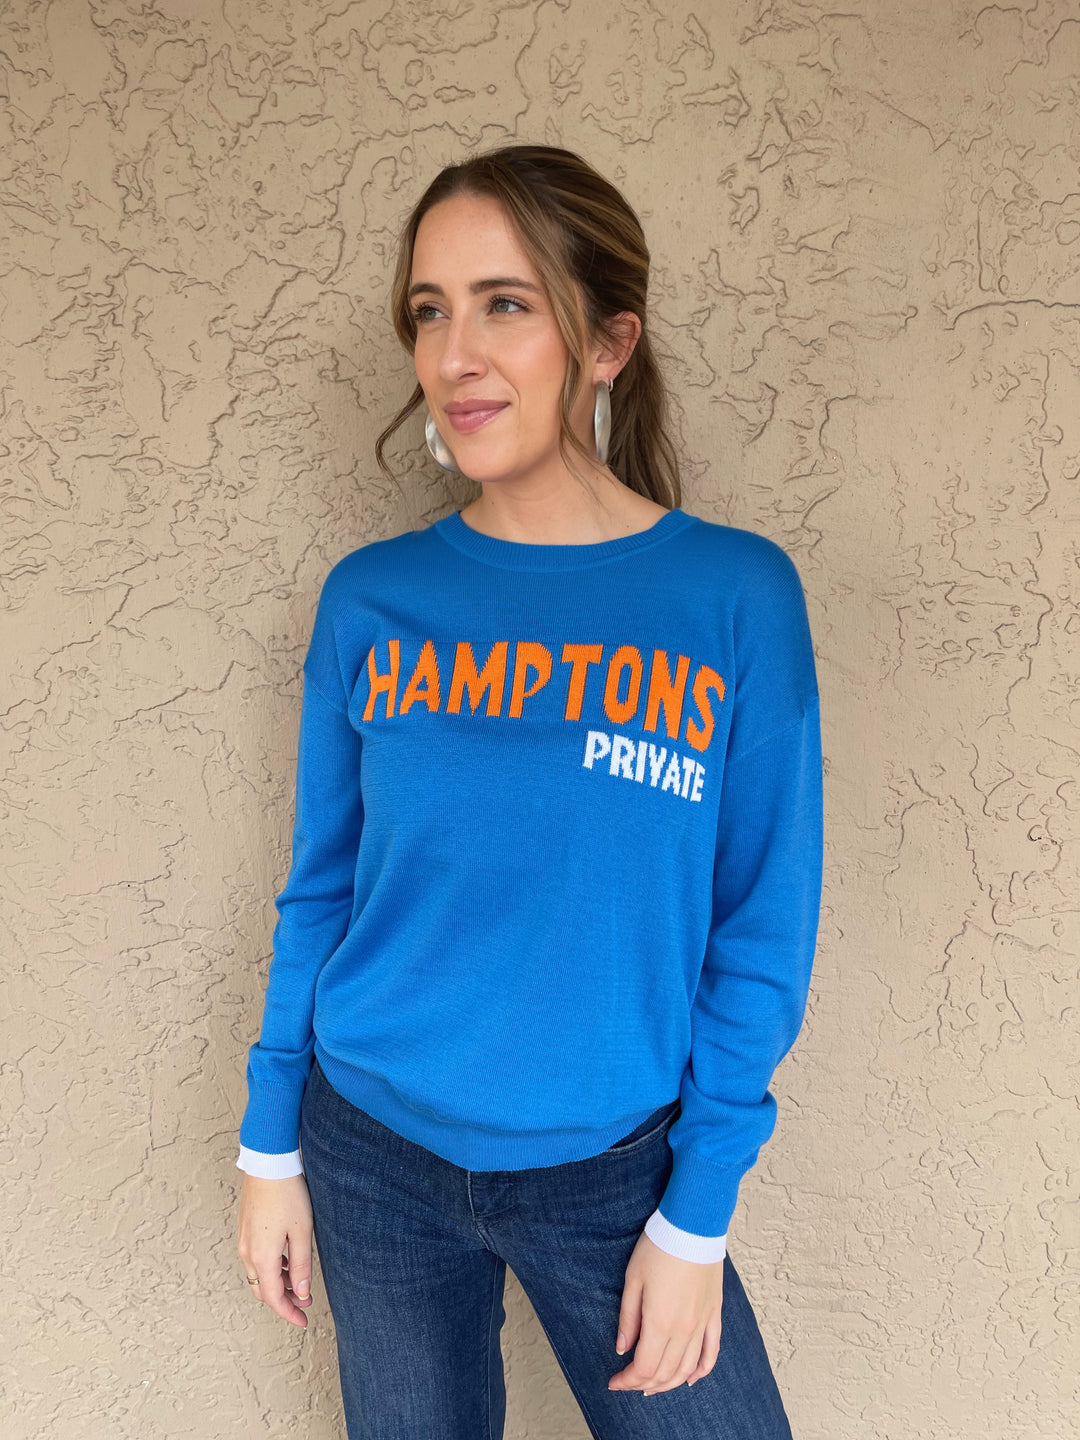 Hamptons Private Crewneck Sweater